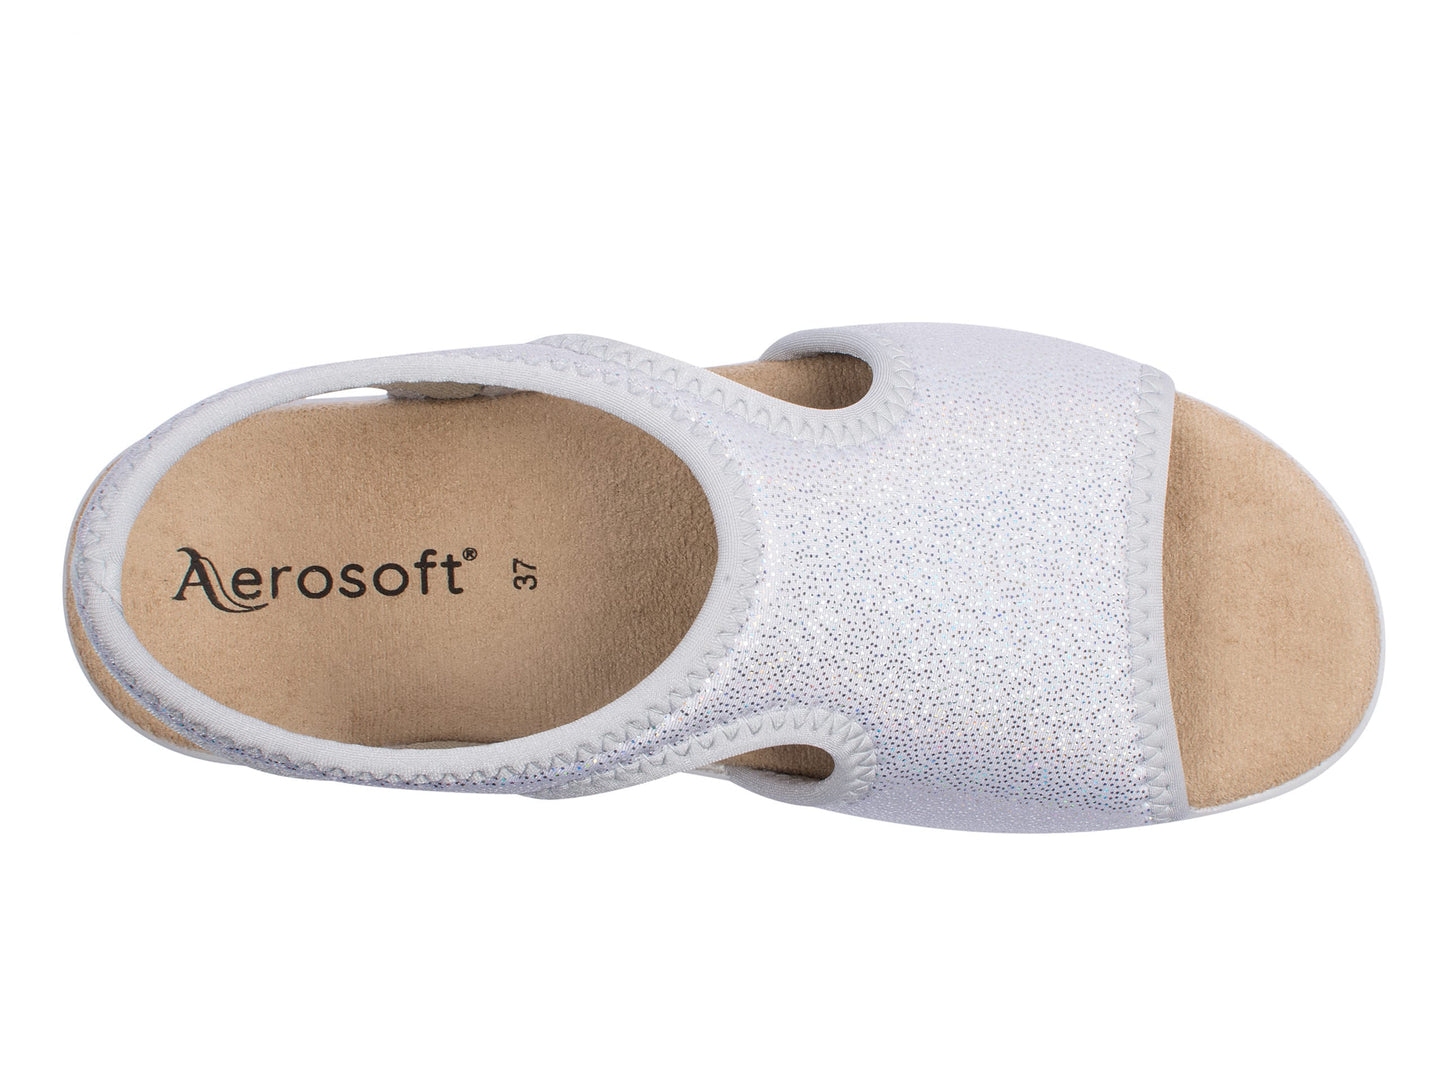 Aerosoft Damen Sandalette Stretch 05